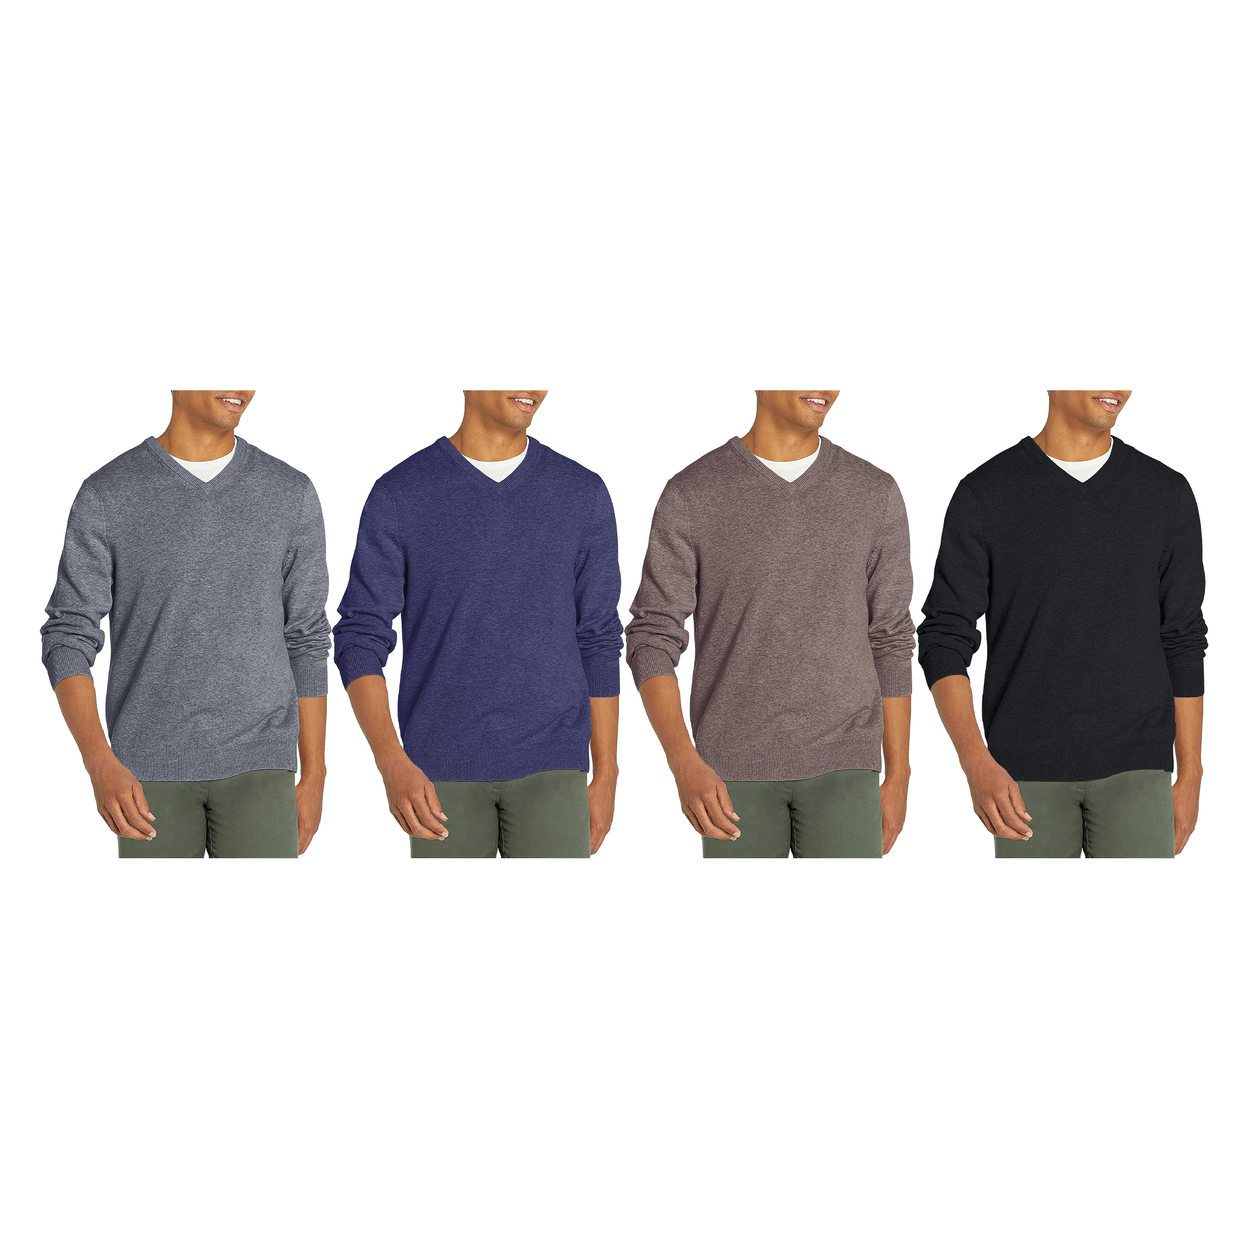 2-Pack: Men's Casual Ultra Soft Slim Fit Warm Knit V-Neck Sweater - Black & Blue, Xx-large